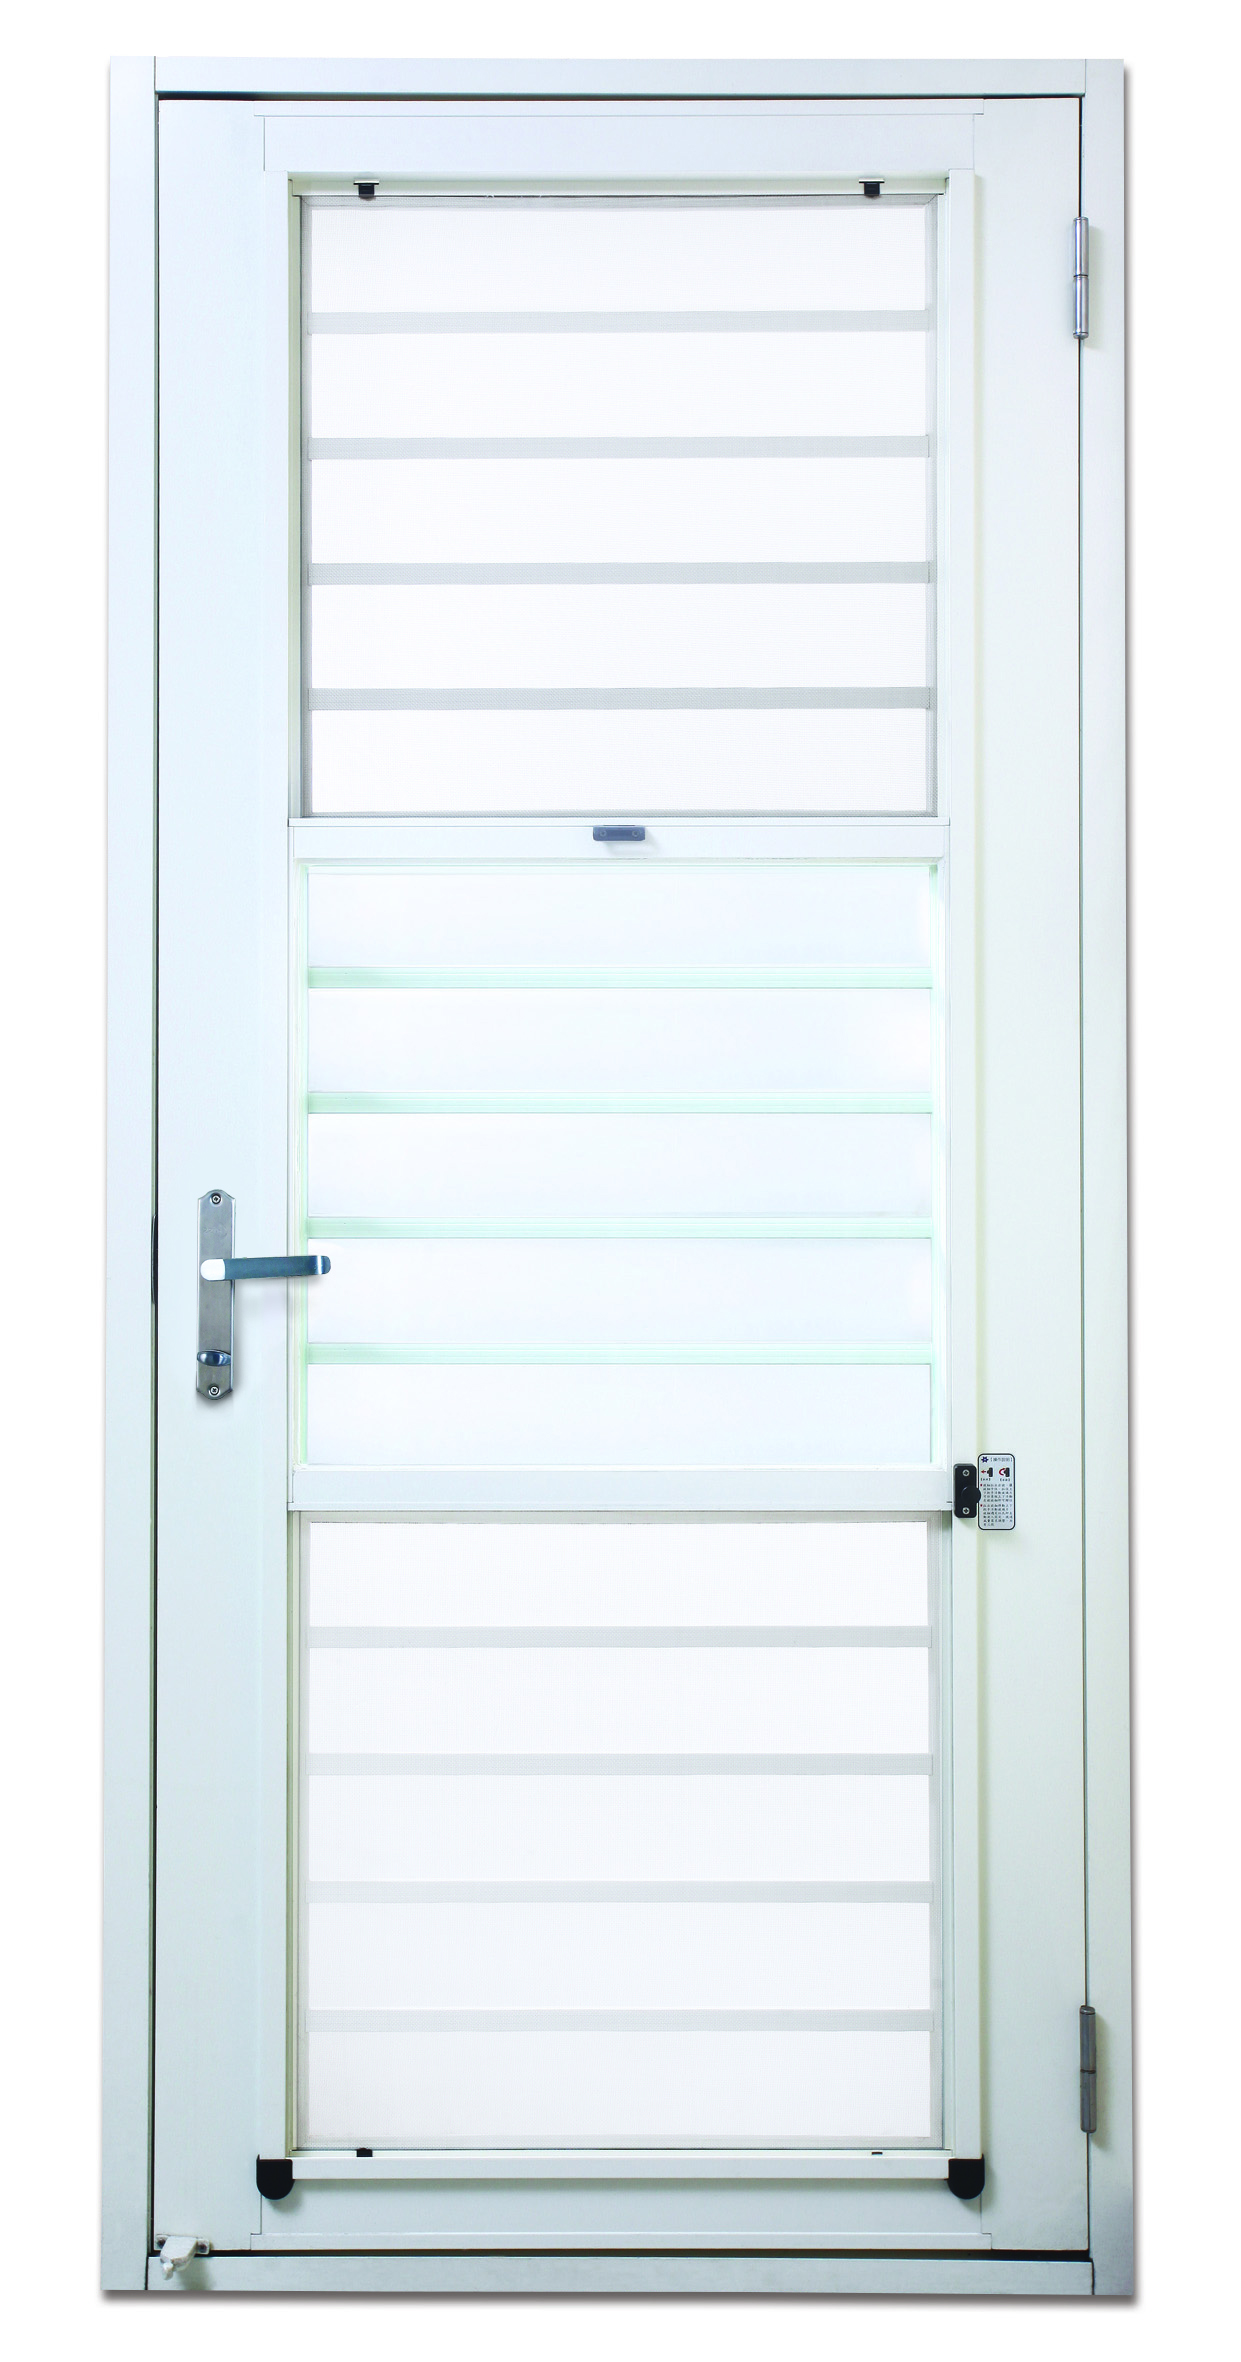 ventilation door with particle ventilation door with particle protection screen